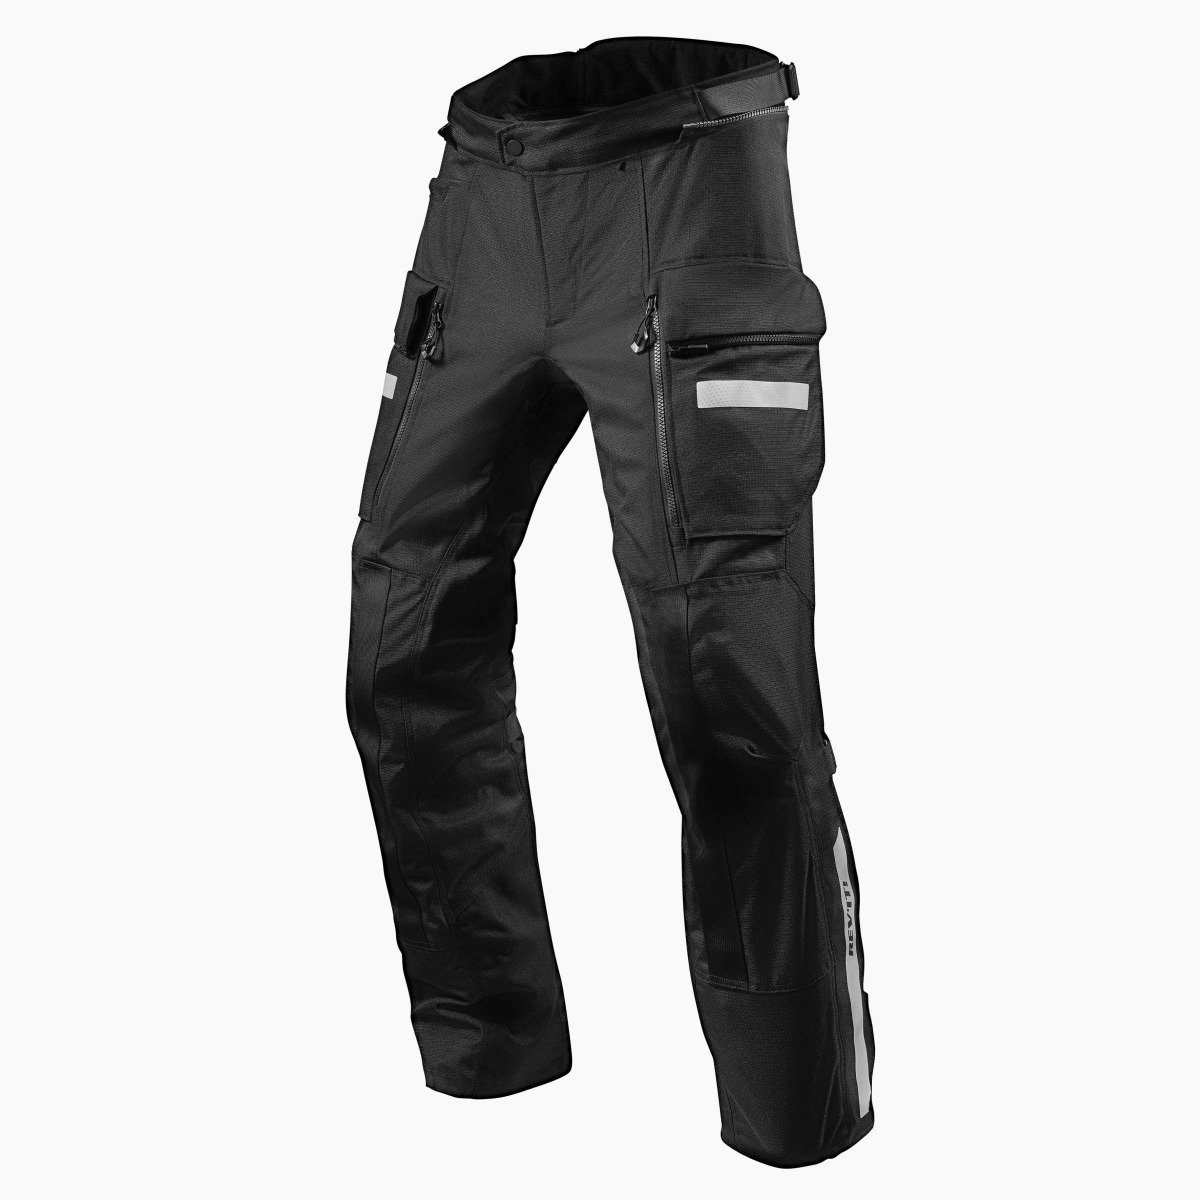 Image of REV'IT! Sand 4 H2O Standard Black Motorcycle Pants Size S EN